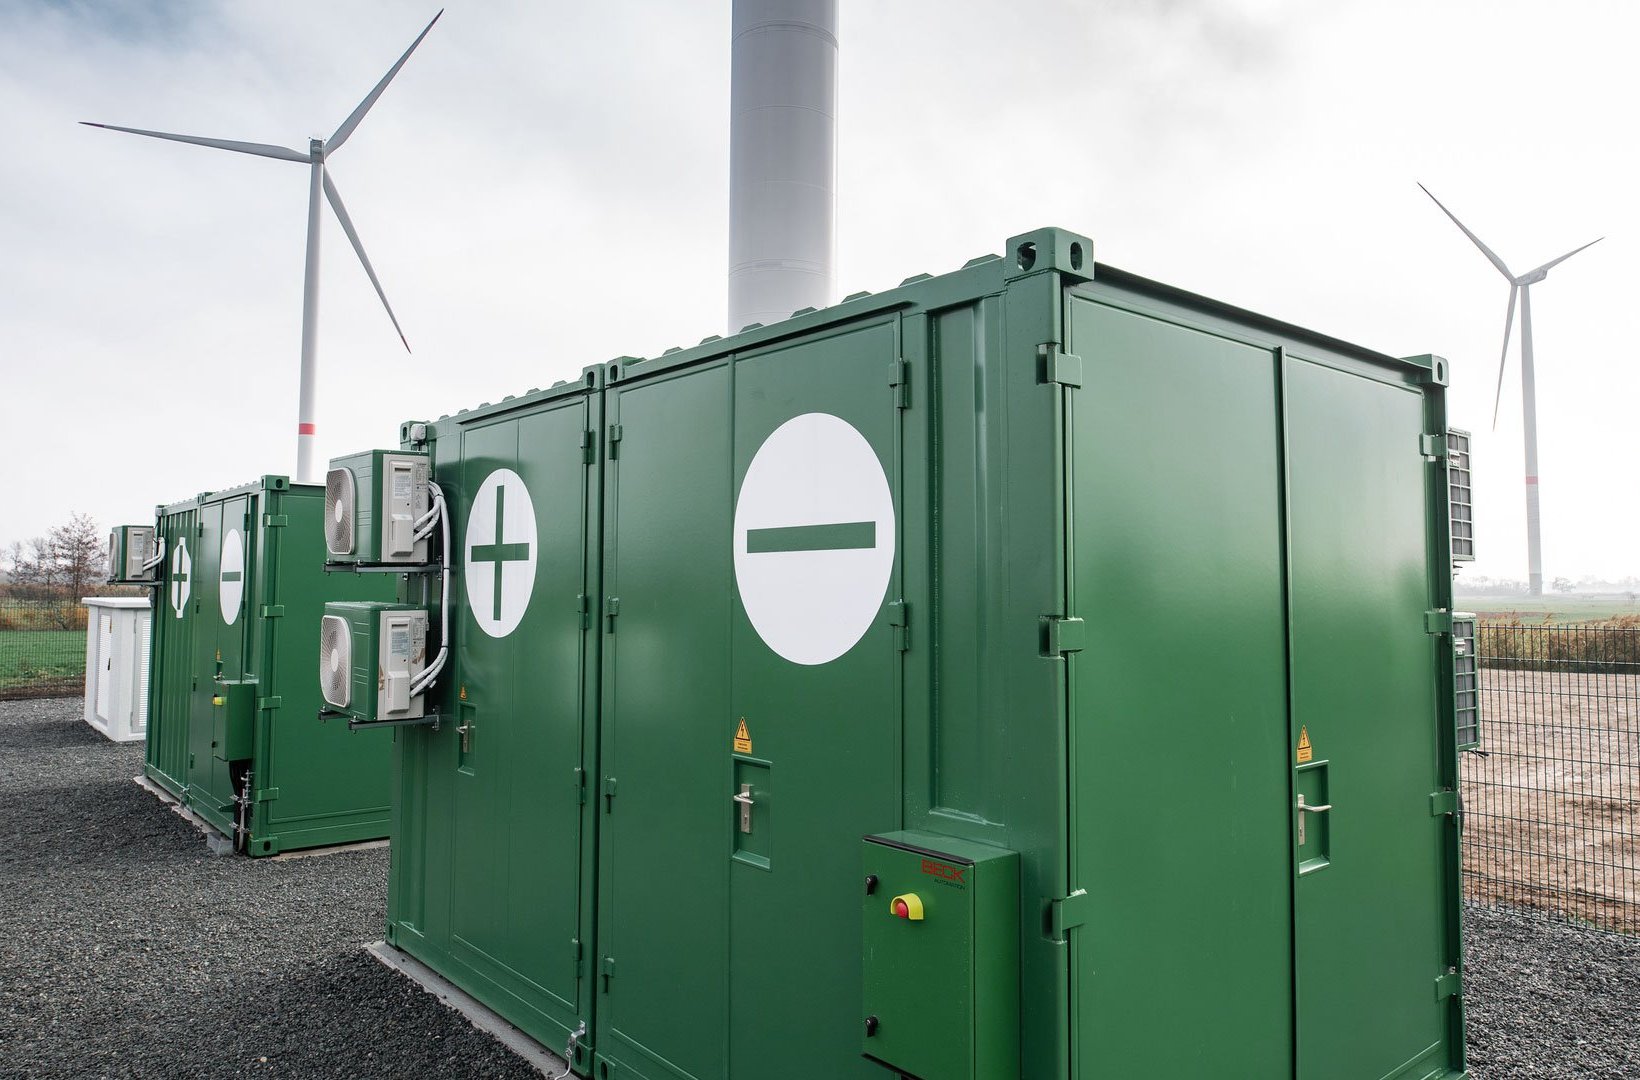 Curslack-Hamburg, combined battery storage facility and wind farm 